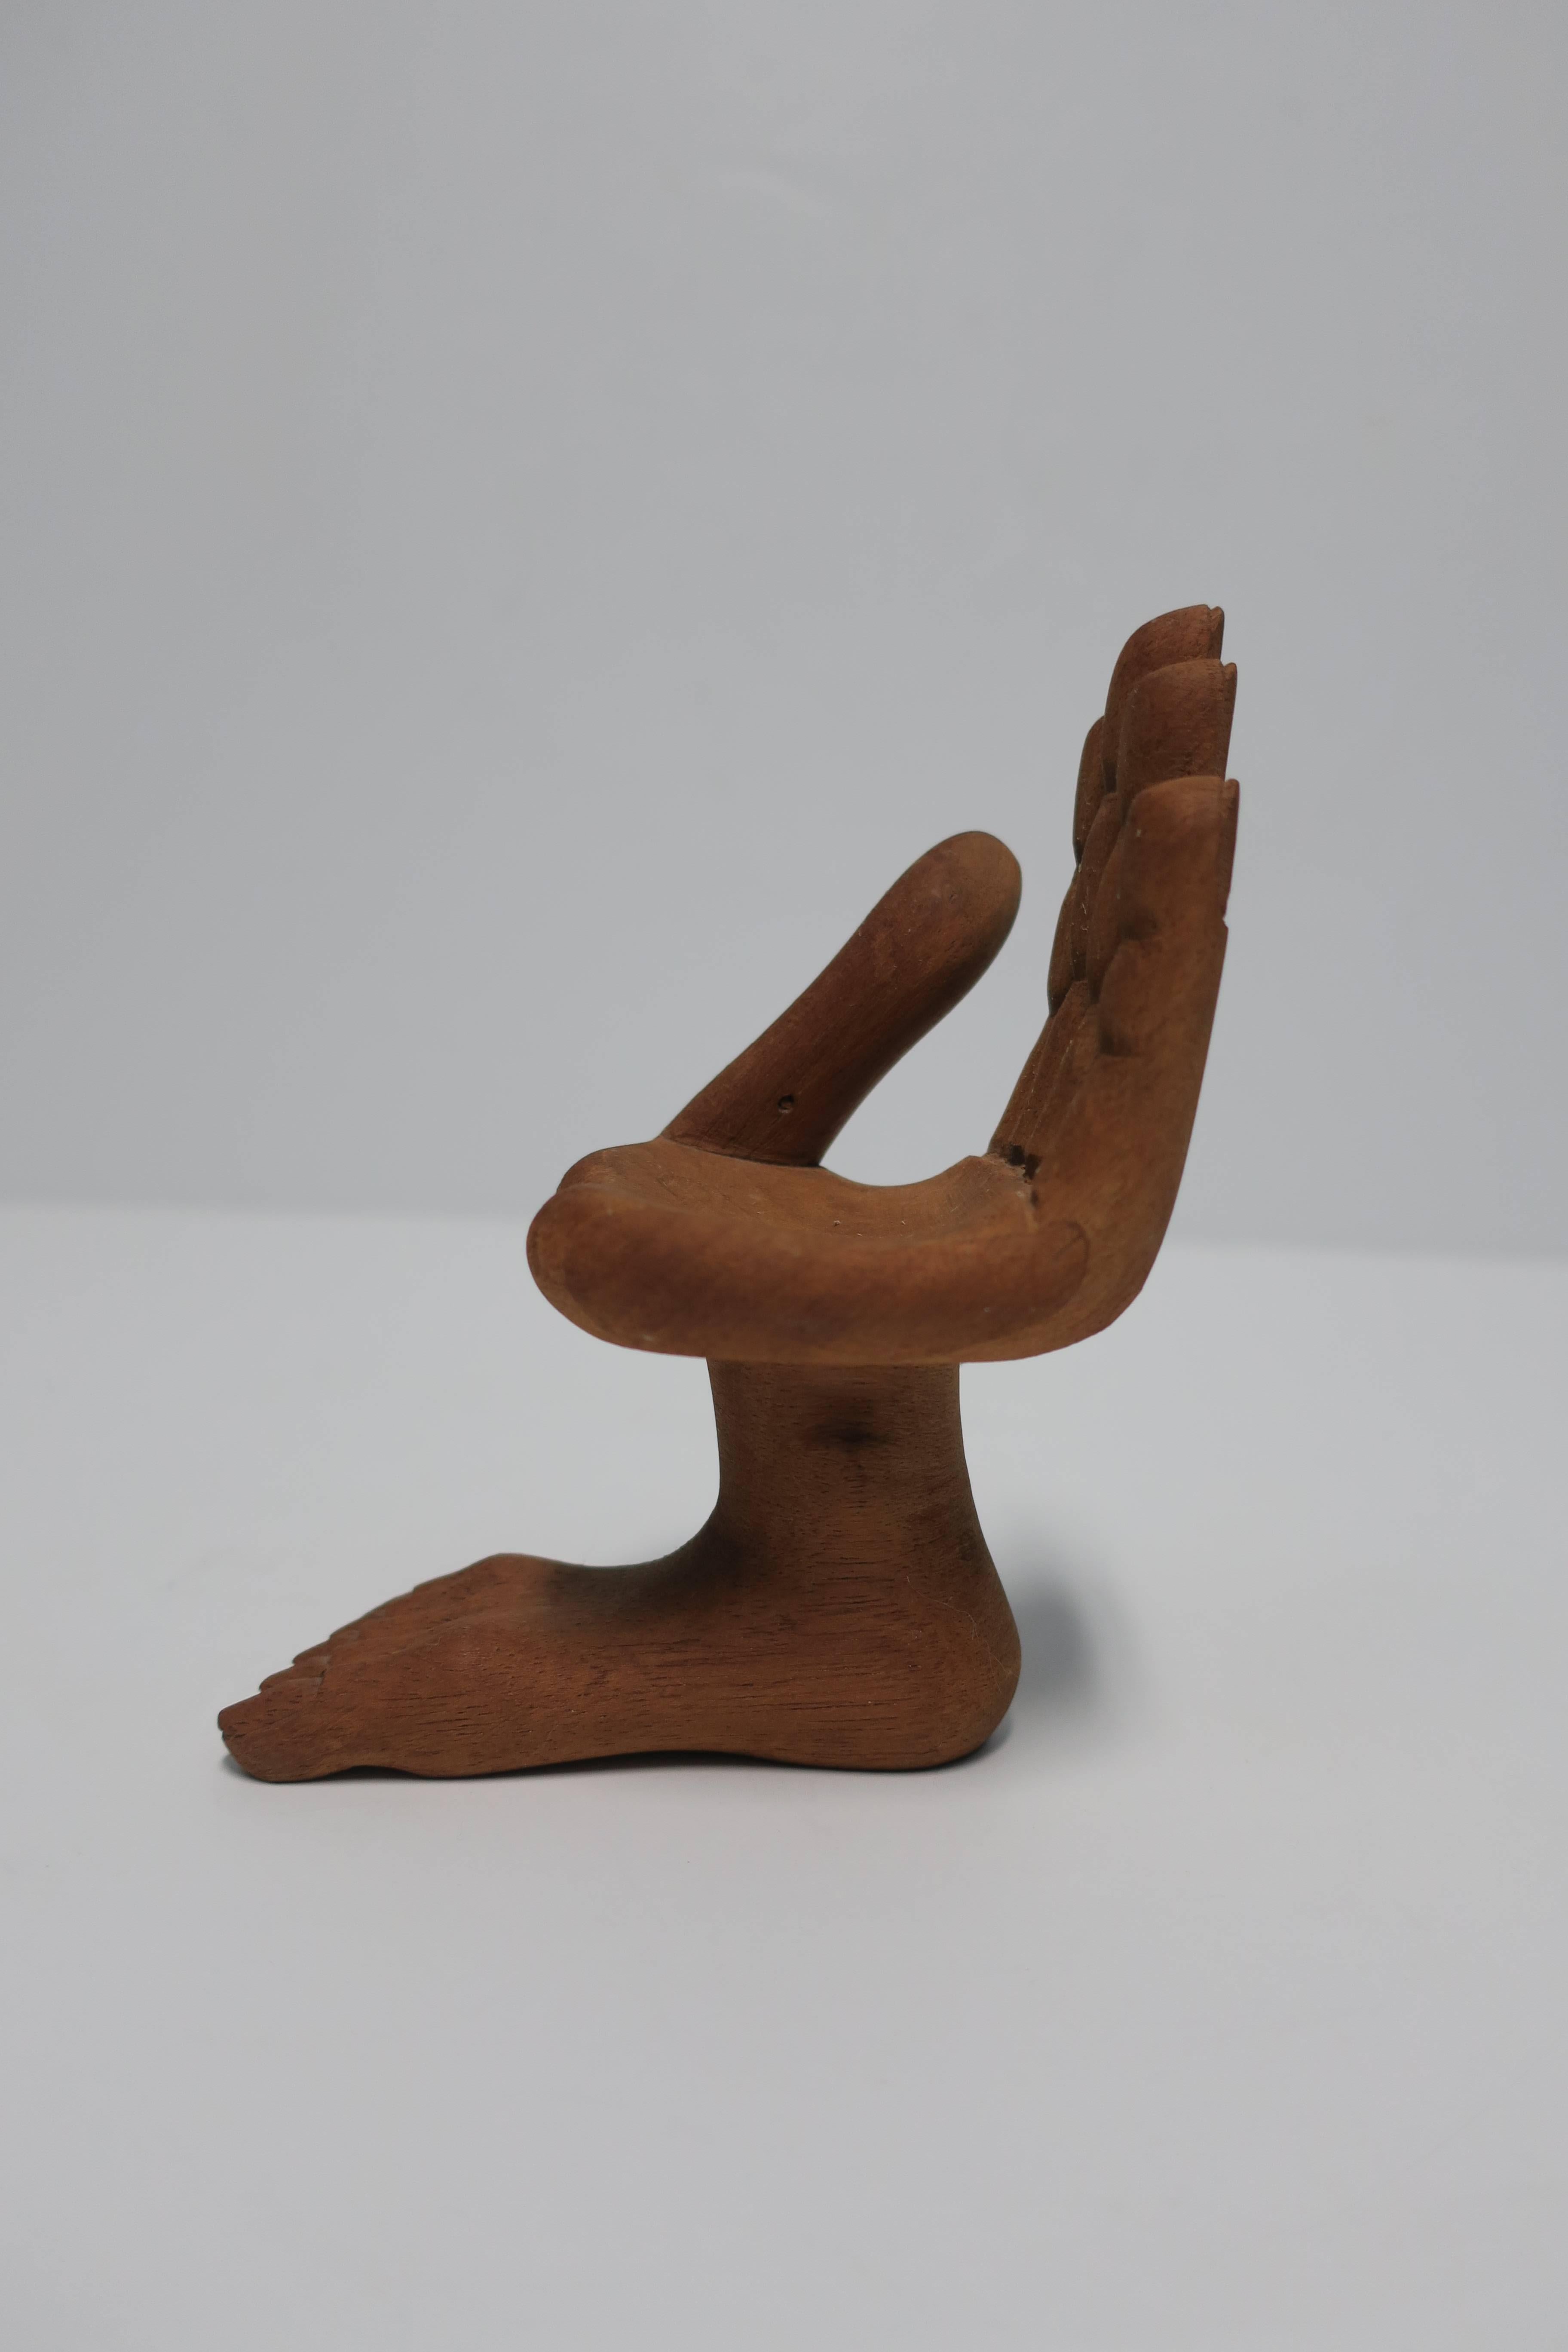 Teak Pedro Friedeberg Hand Chair Decorative Object Sculpture